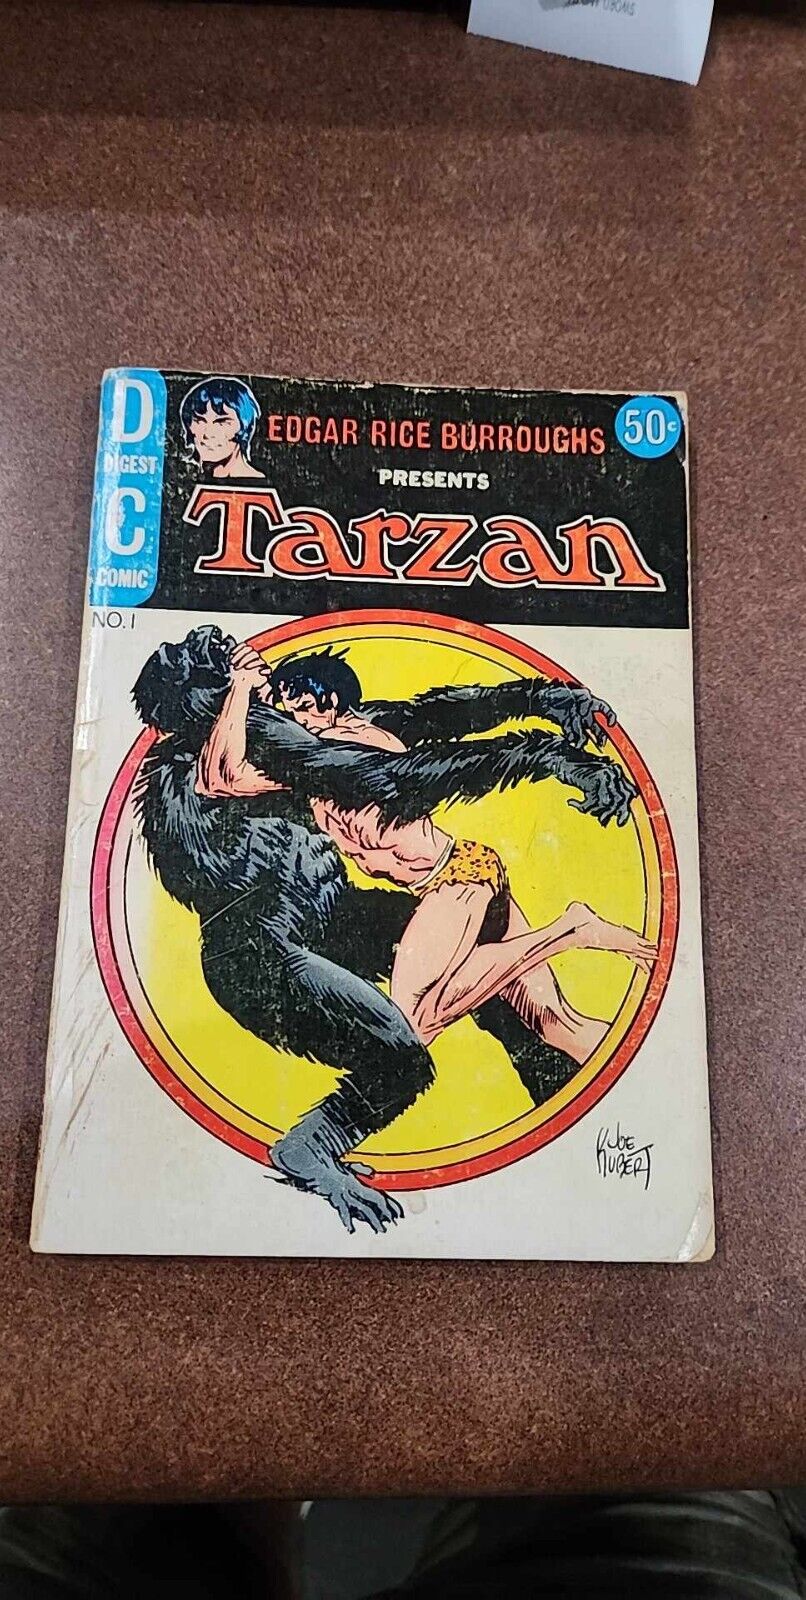 Edgar Rice Burroughs Presents Tarzan Digest #1